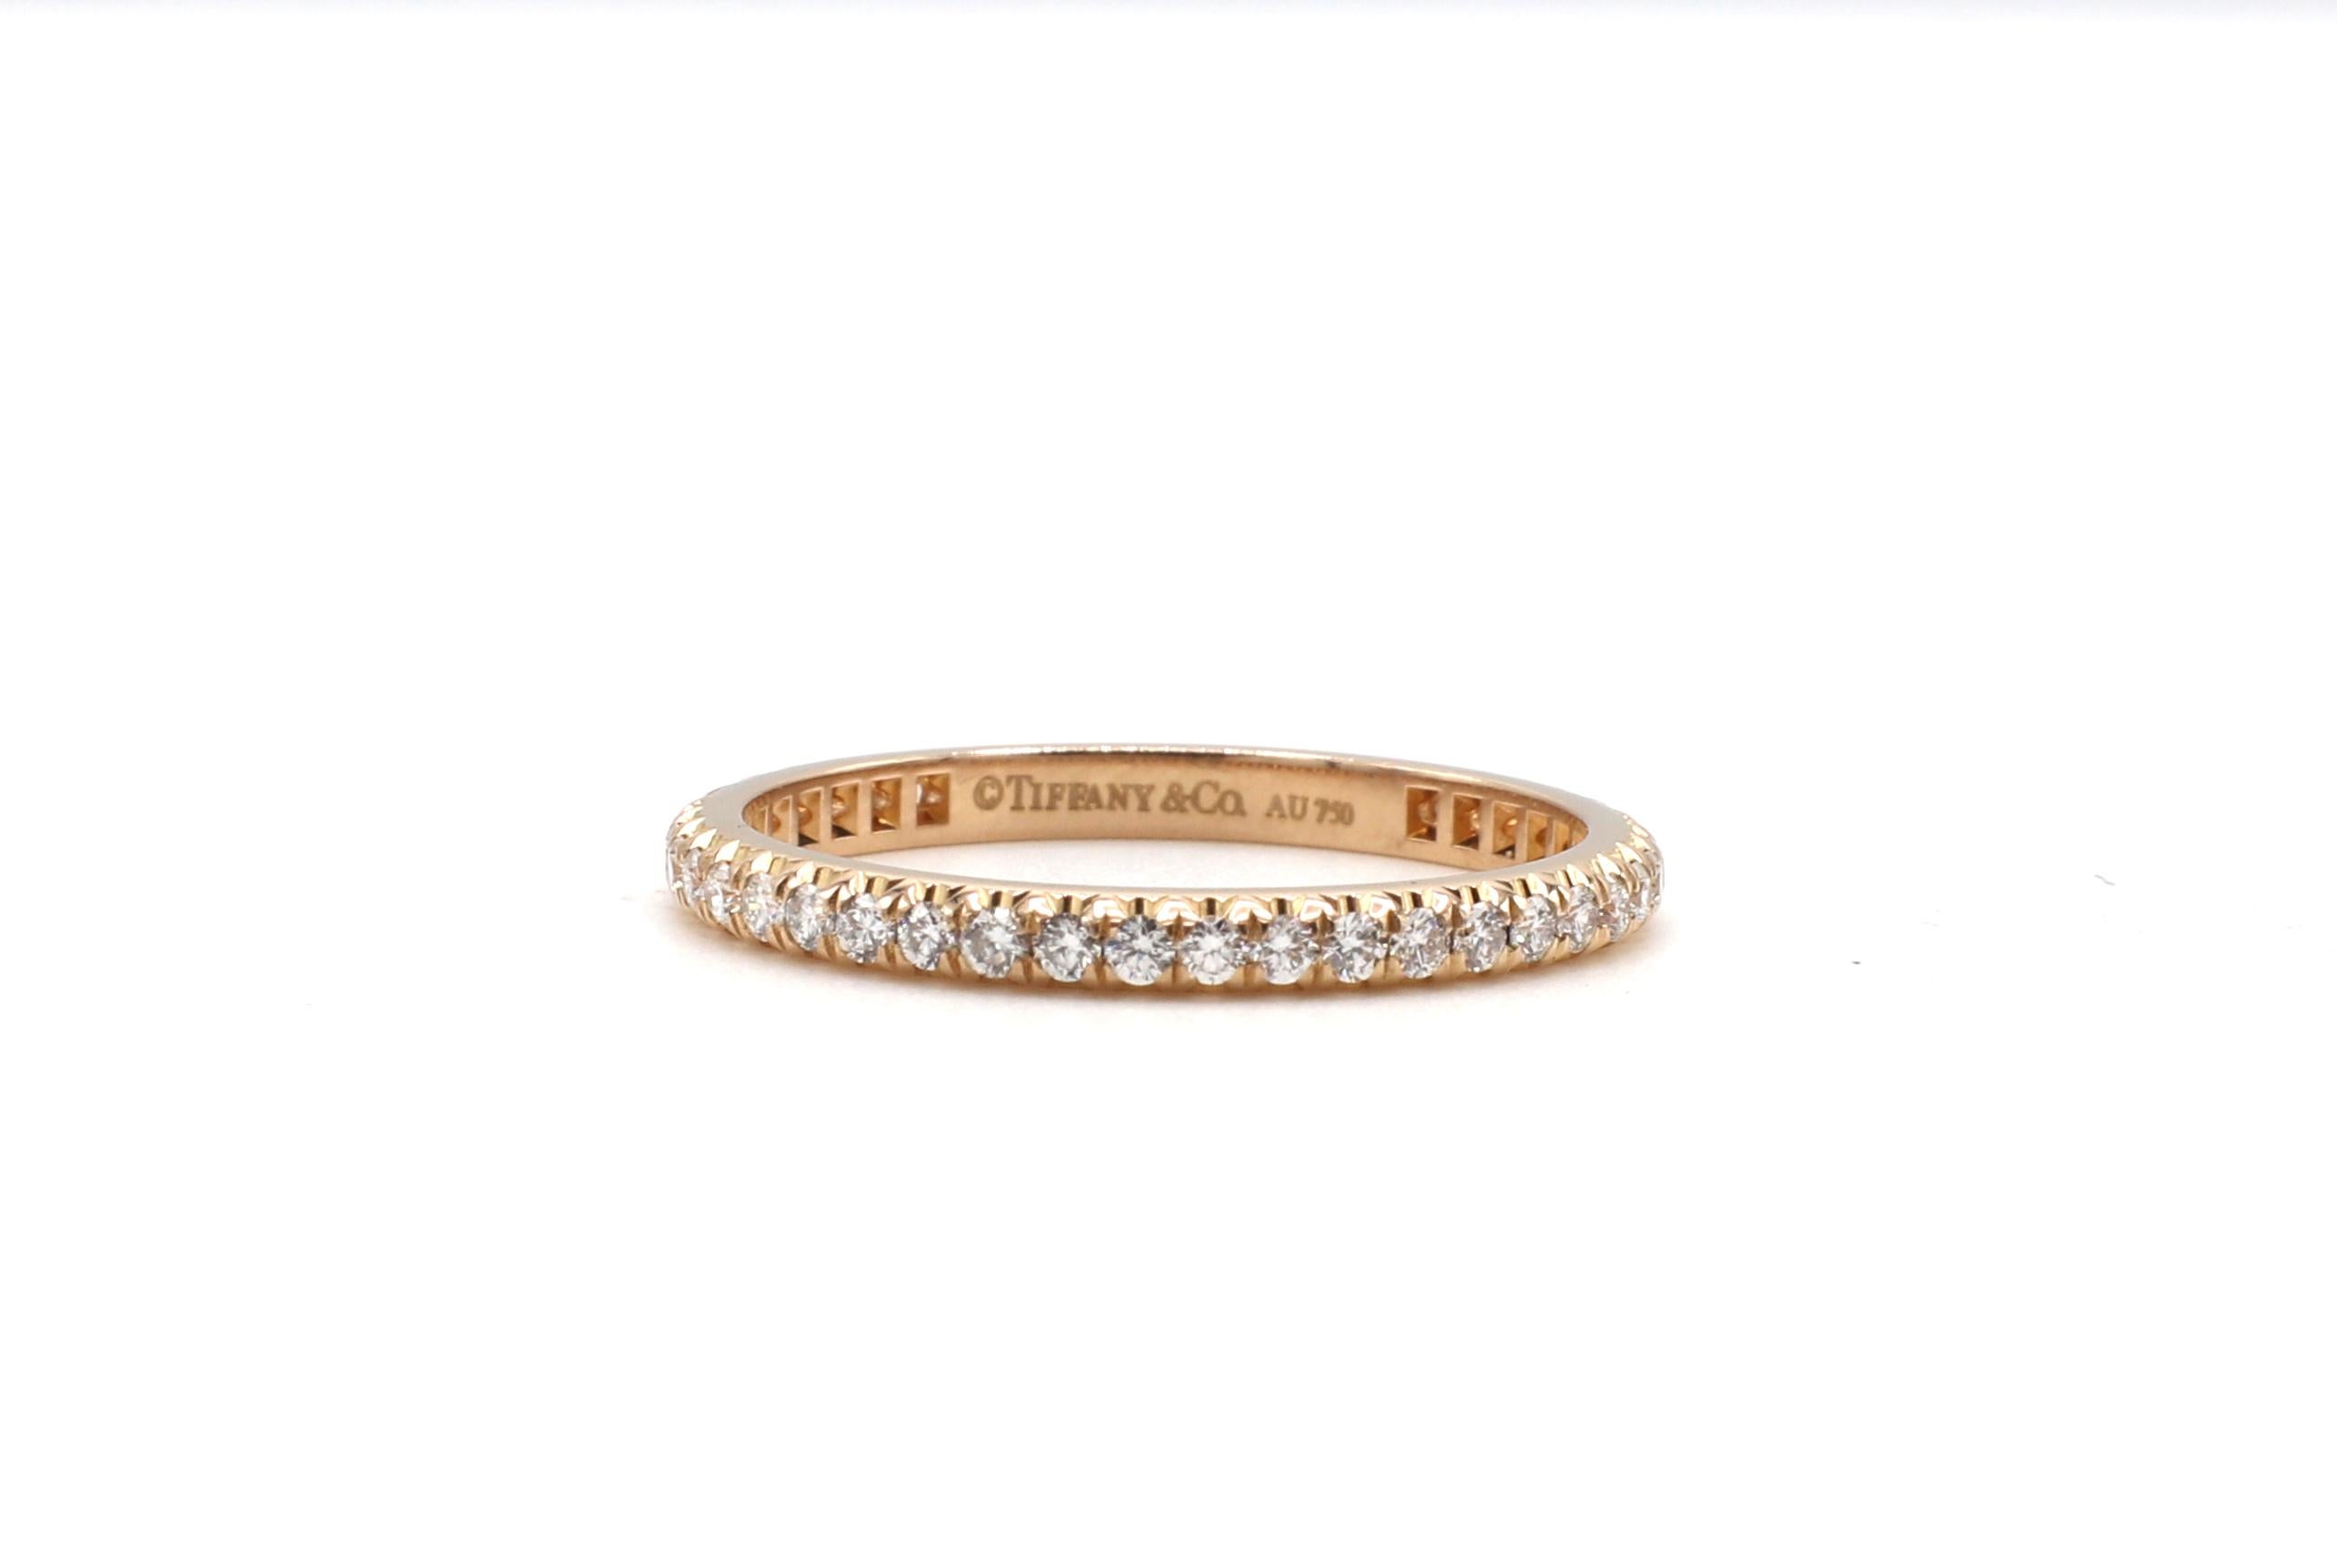 Tiffany & Co. Soleste 18 Karat Rose Gold Diamond Eternity Band Ring

Metal: 18 karat rose gold
Weight: 1.86 grams
Diamonds: Approx. 0.34 CTW G VS
Size: 6 (US)
Width: 2mm
Signed: Tiffany & Co. Au750
Retail: $3,600 USD